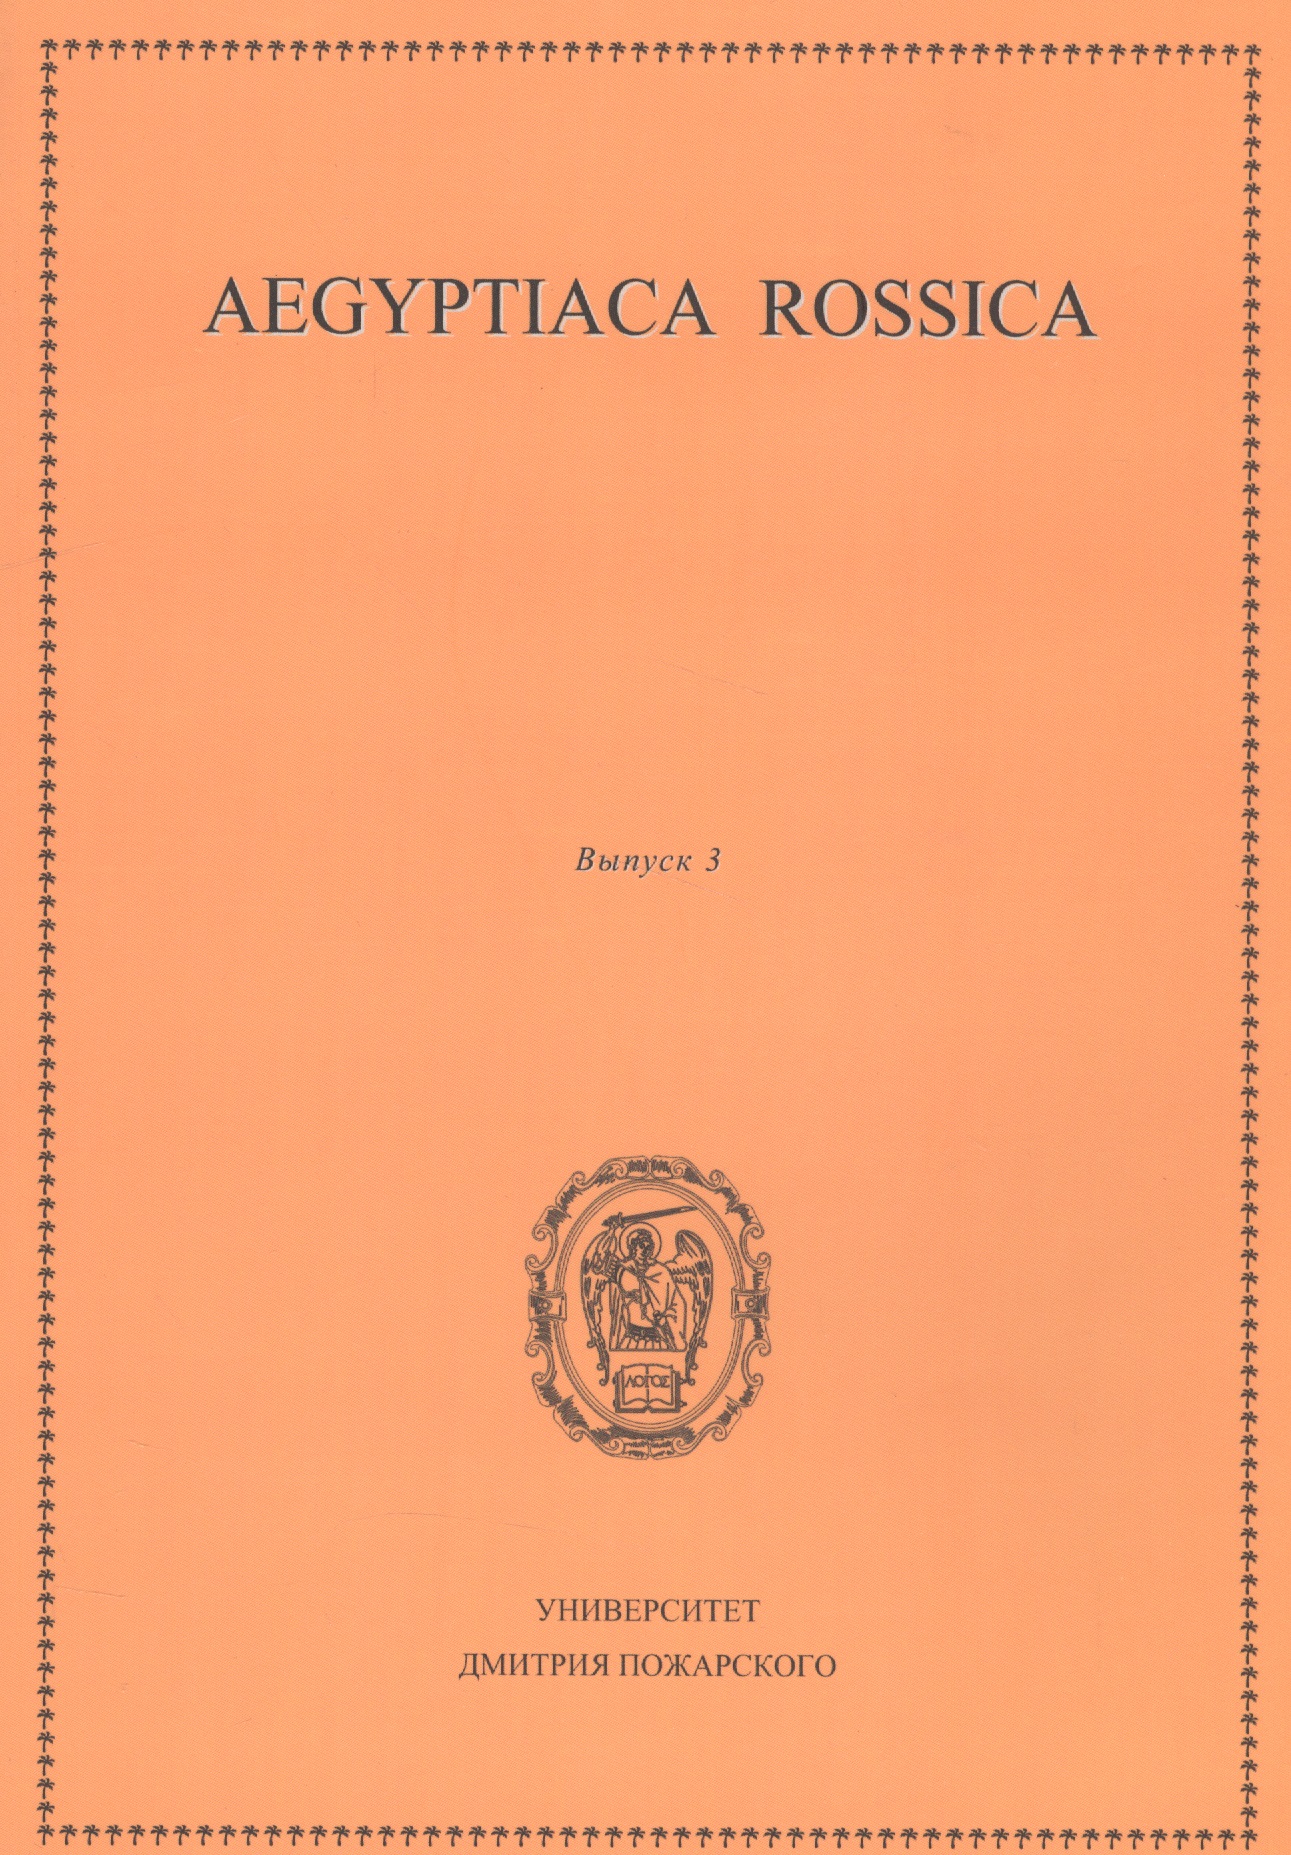 Aegyptiaca Rossica 3 (Египтология. Выпуск 3) чегодаев м а aegyptiaca rossica 3 египтология выпуск 3